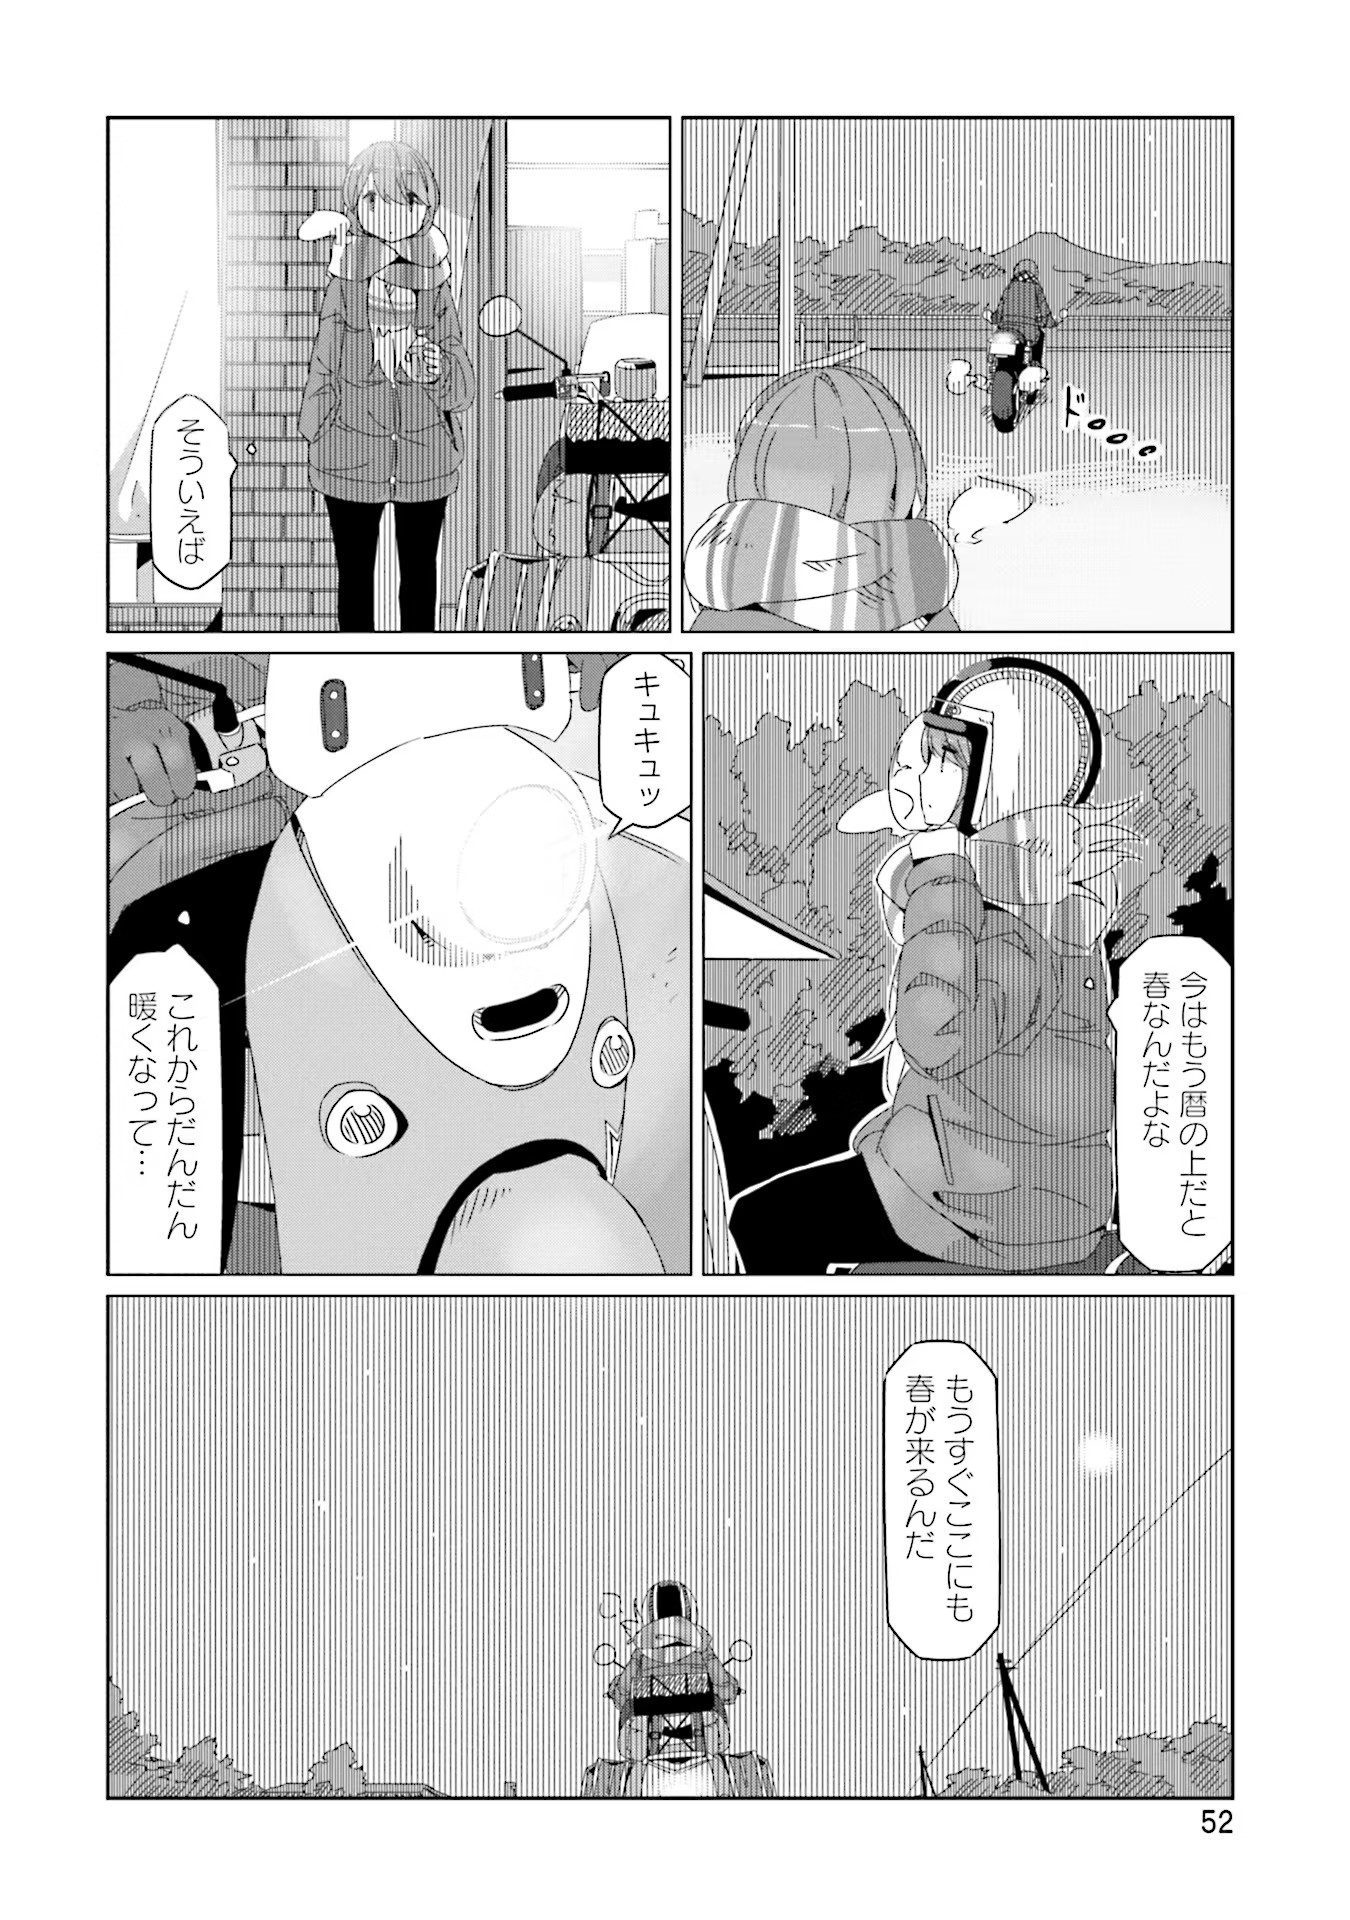 Yuru Camp - Chapter 42 - Page 24